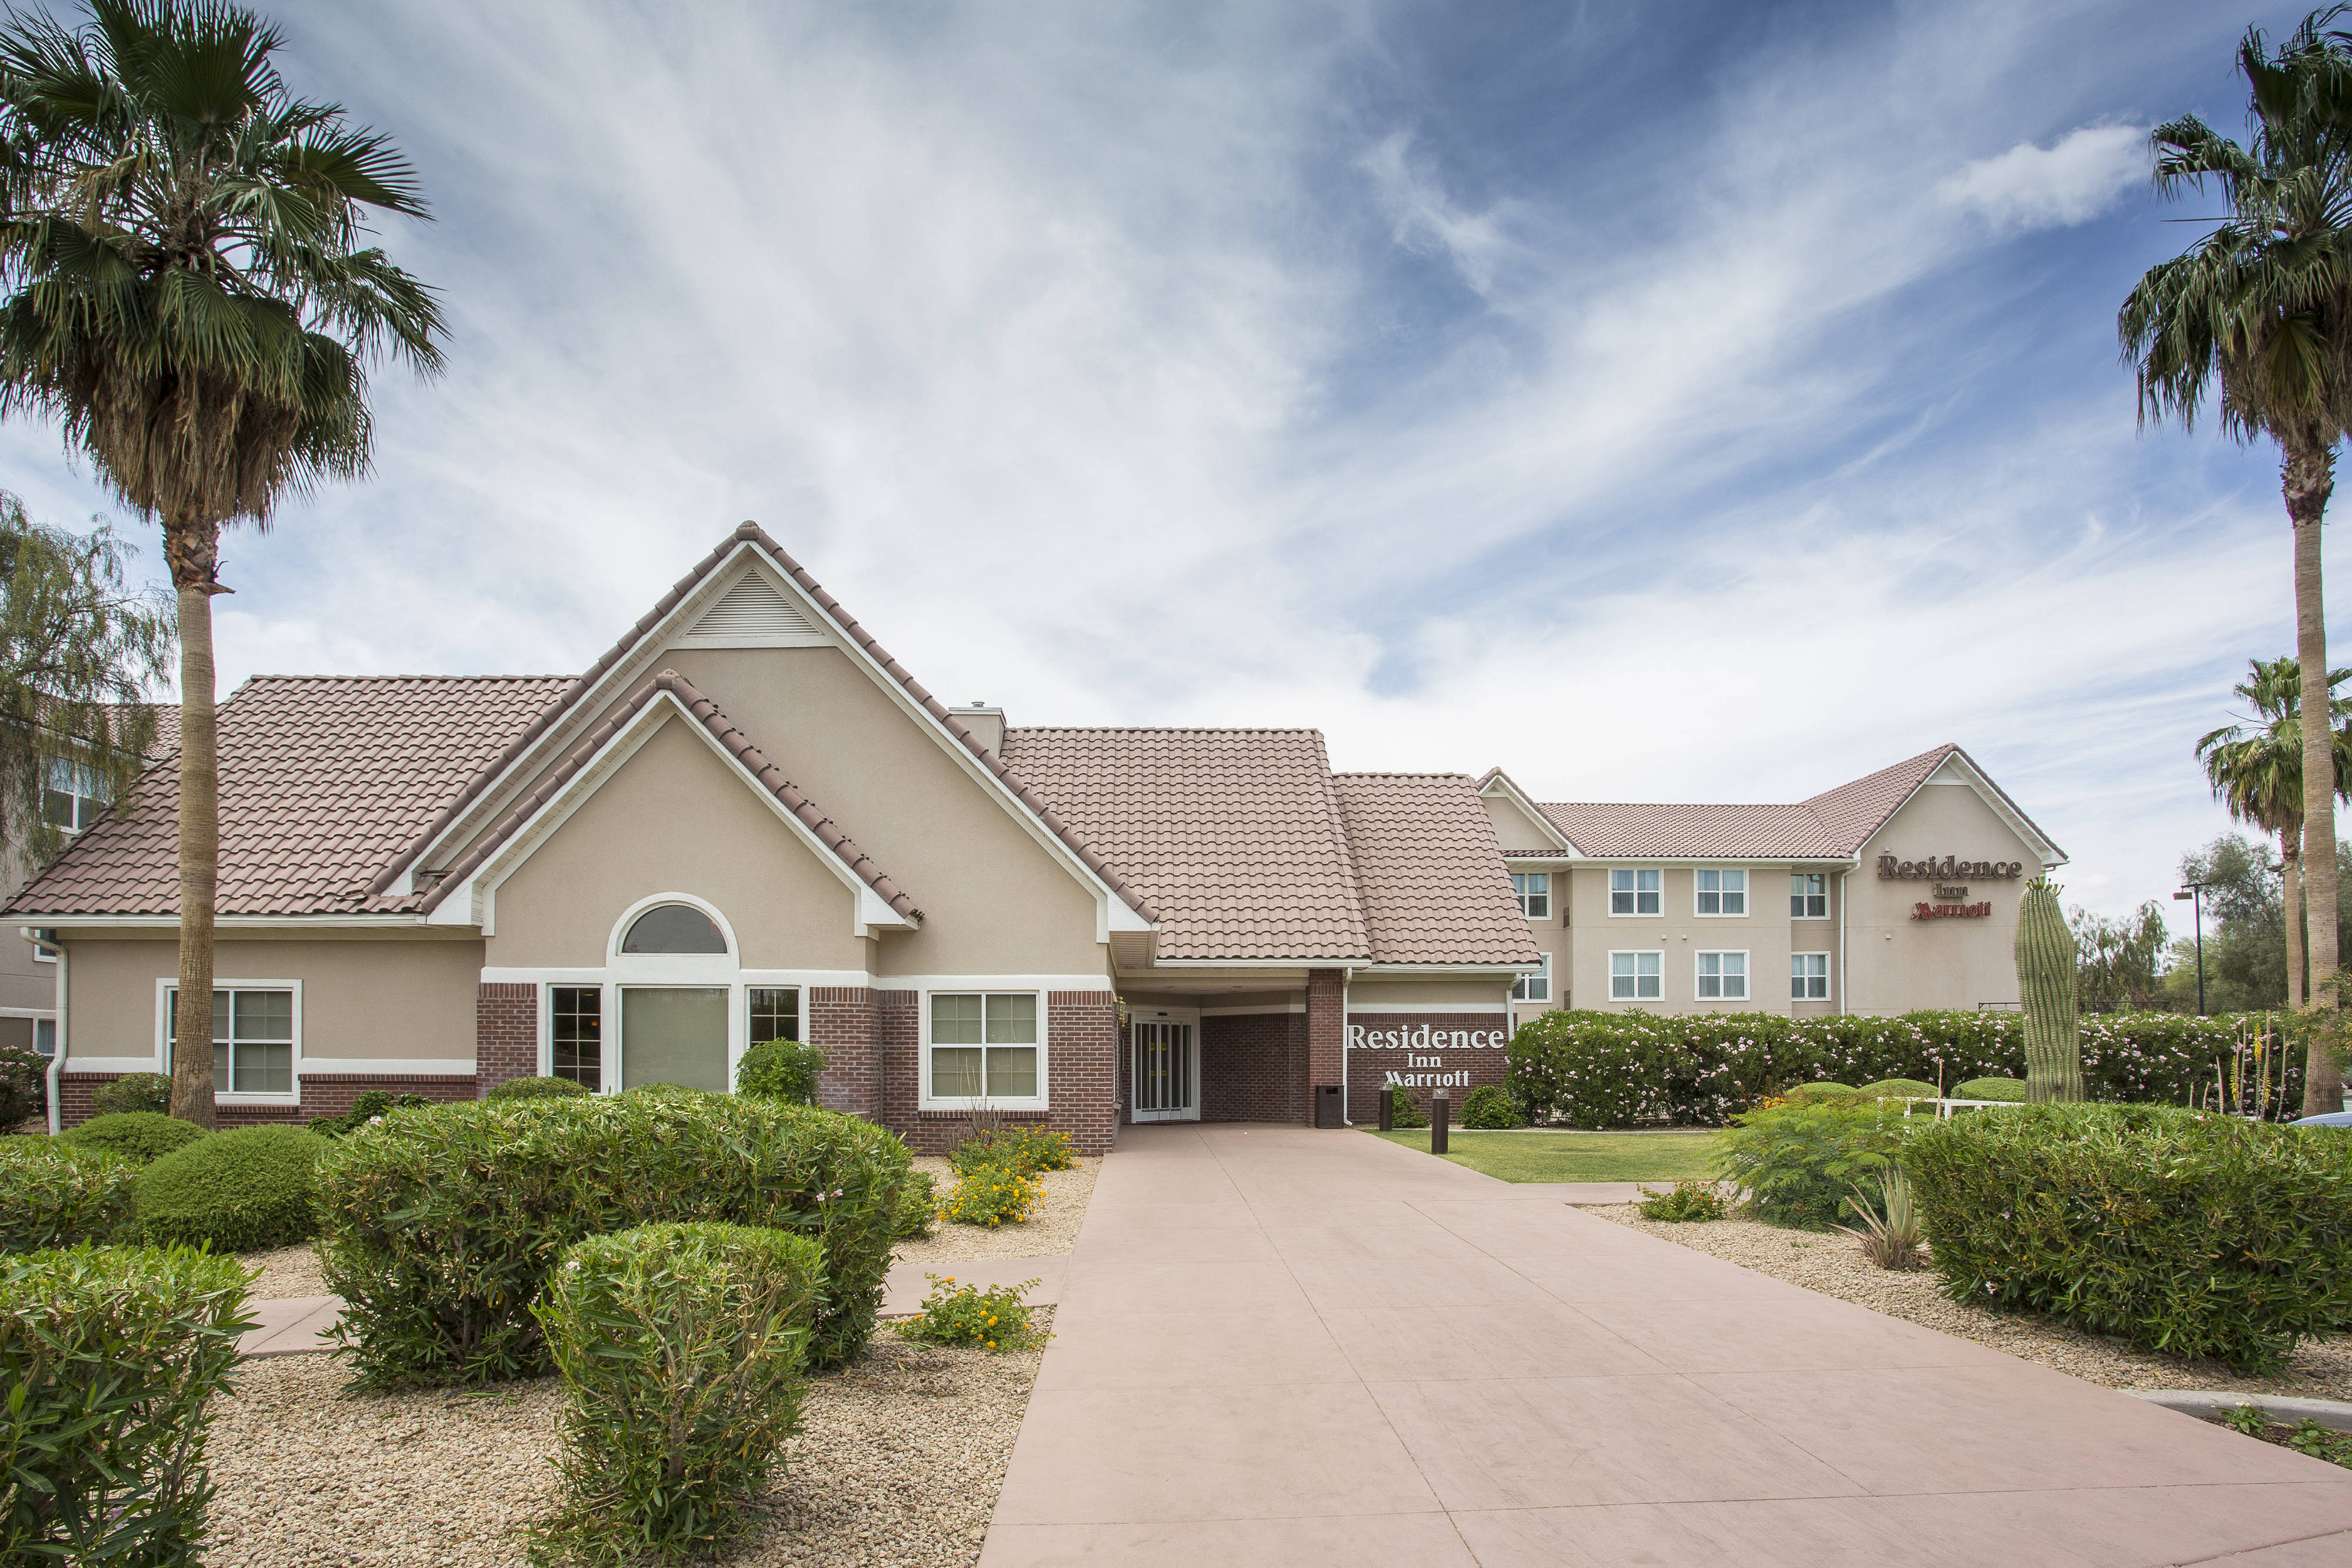 Photo of Residence Inn by Marriott Phoenix Glendale/Peoria, Peoria, AZ